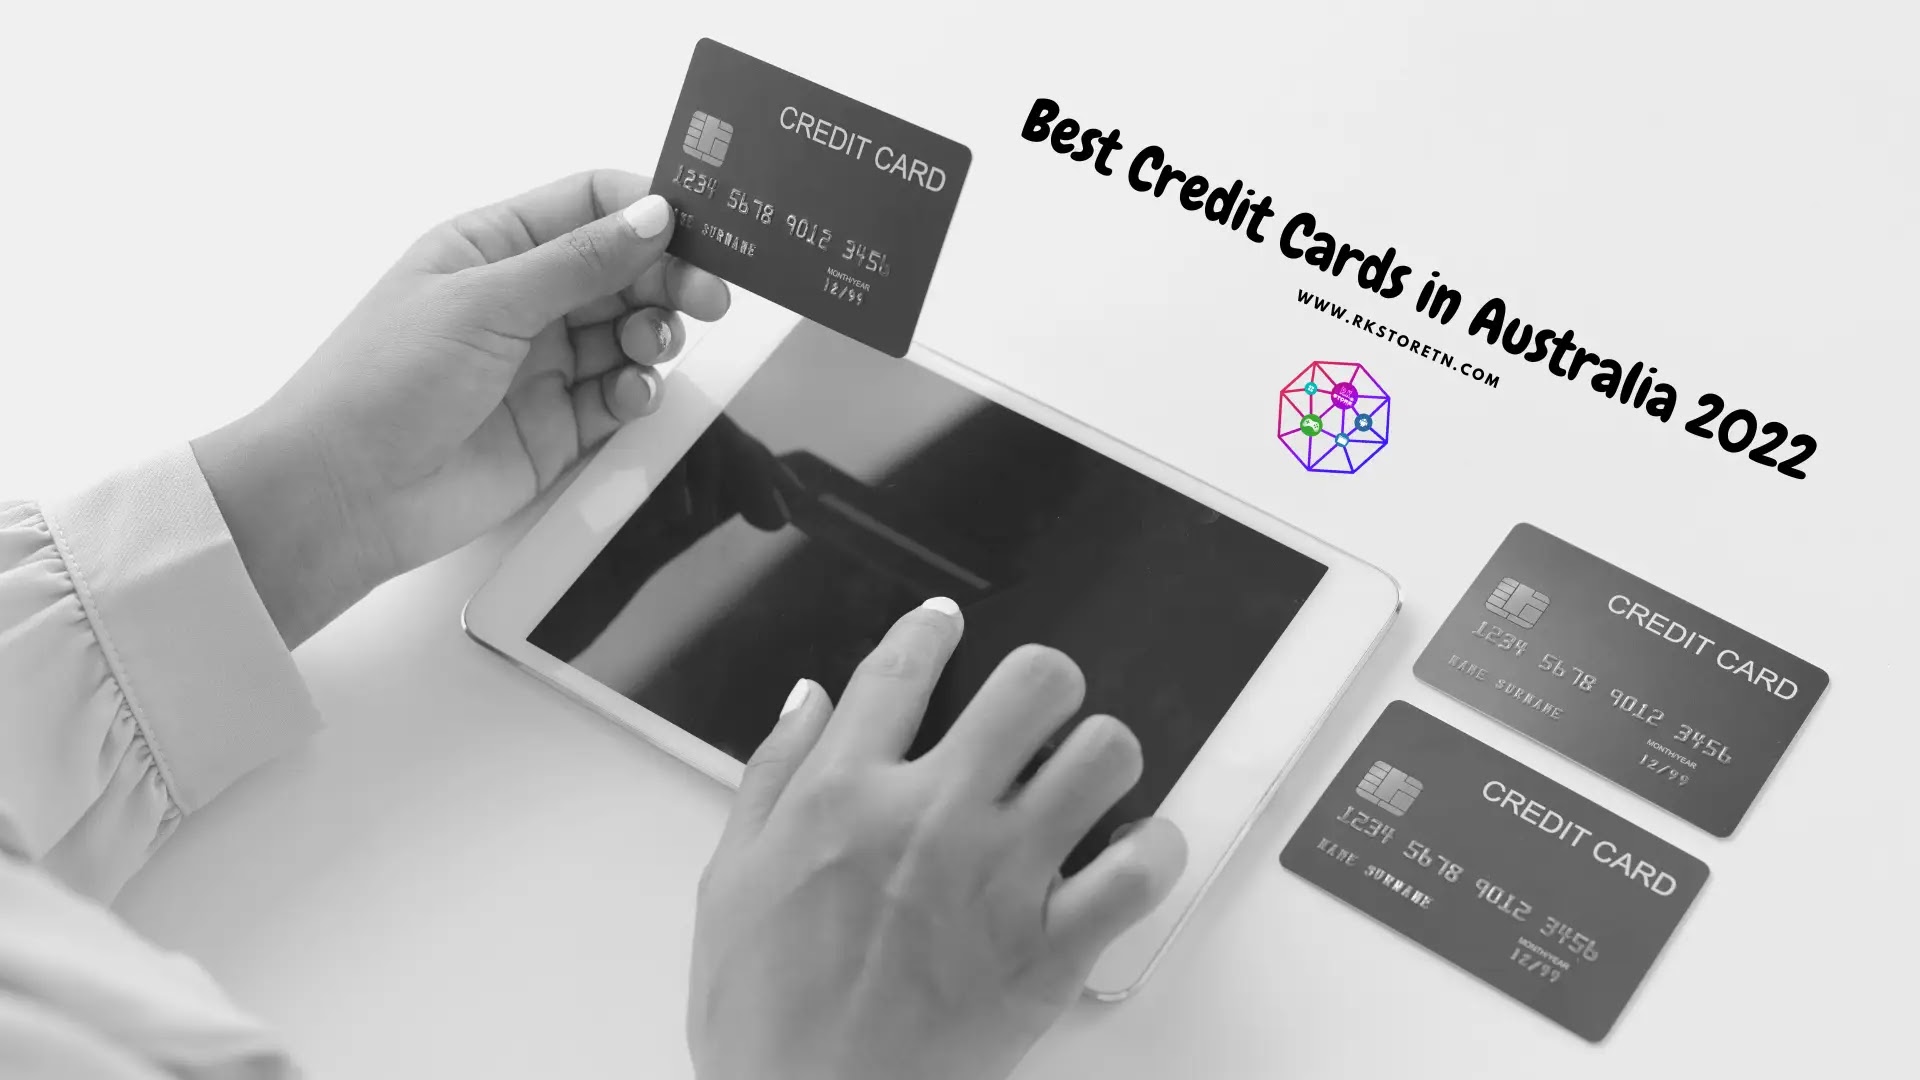 Best Credit Cards in Australia 2022